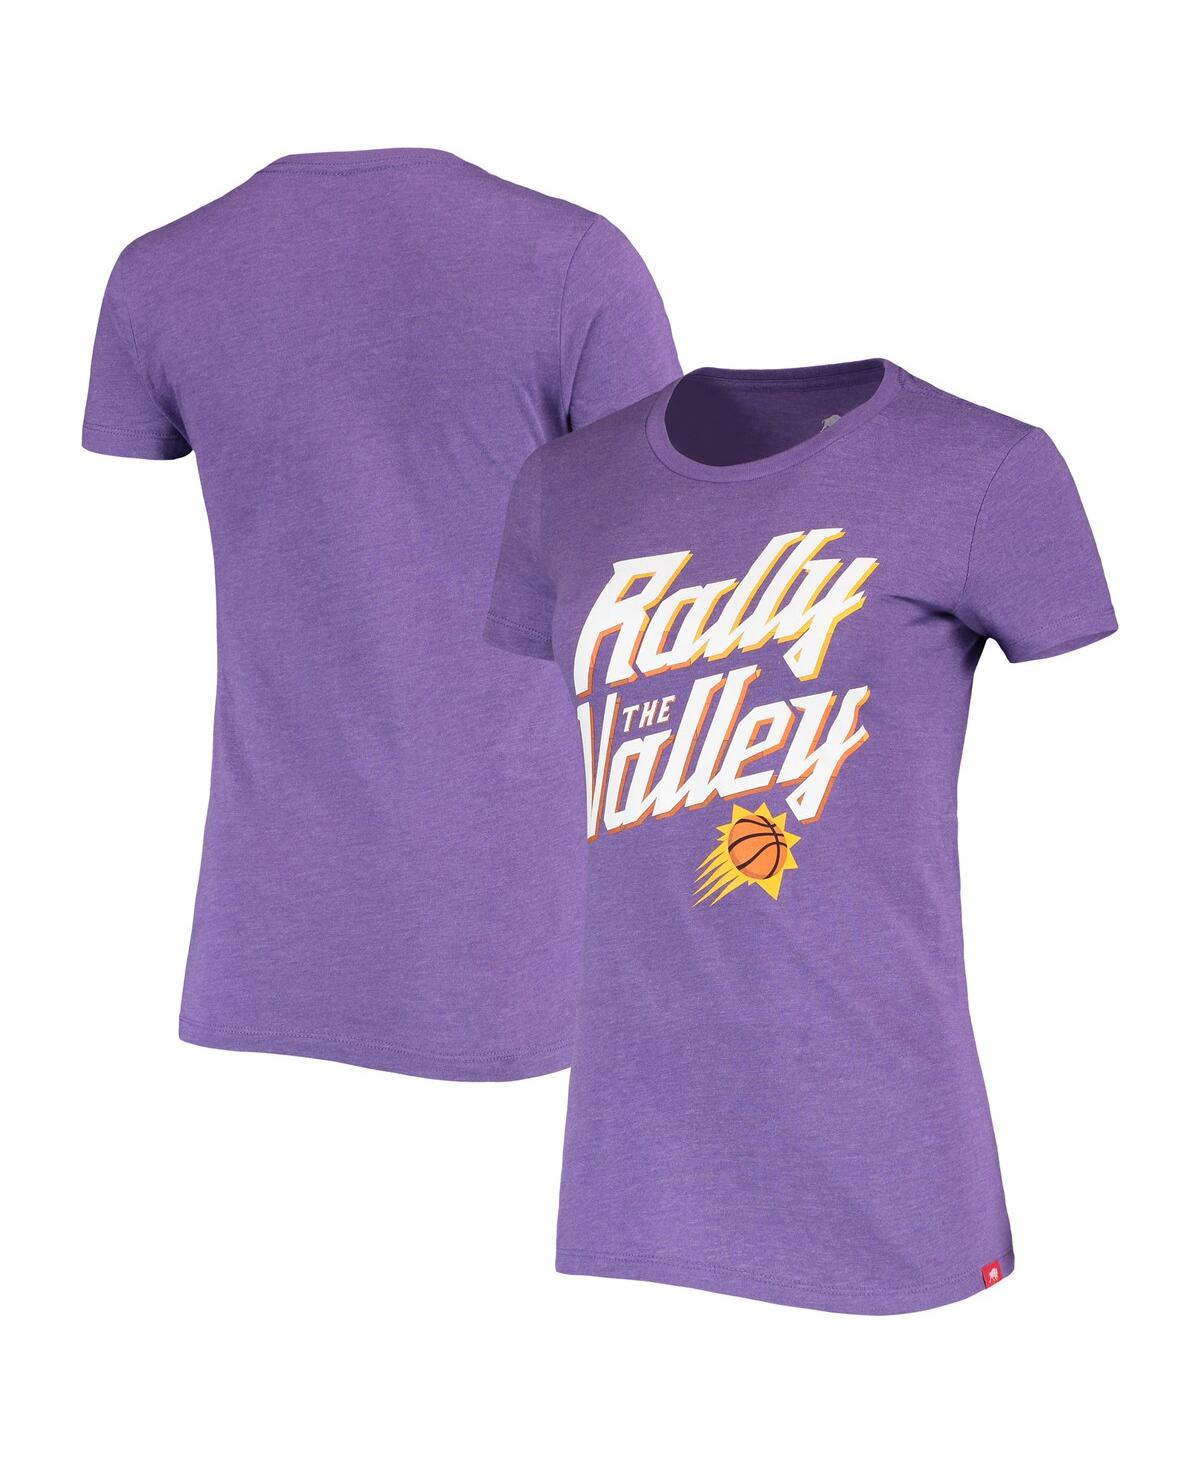 Women's Sportiqe Heathered Purple Phoenix Suns Rally the Valley Davis T-shirt - Heathered Purple